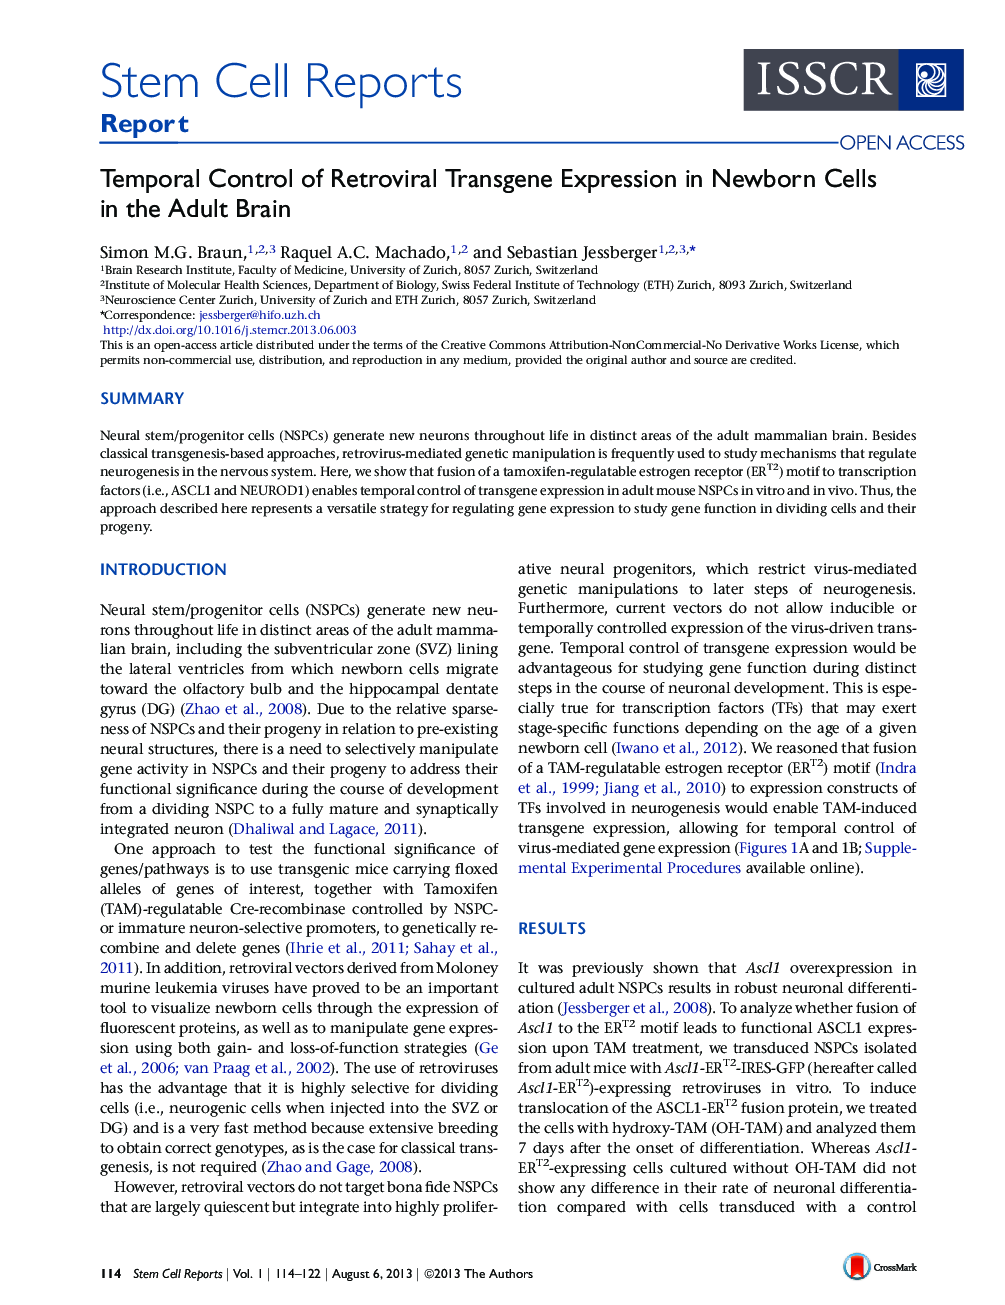 Temporal Control of Retroviral Transgene Expression in Newborn Cells in the Adult Brain 